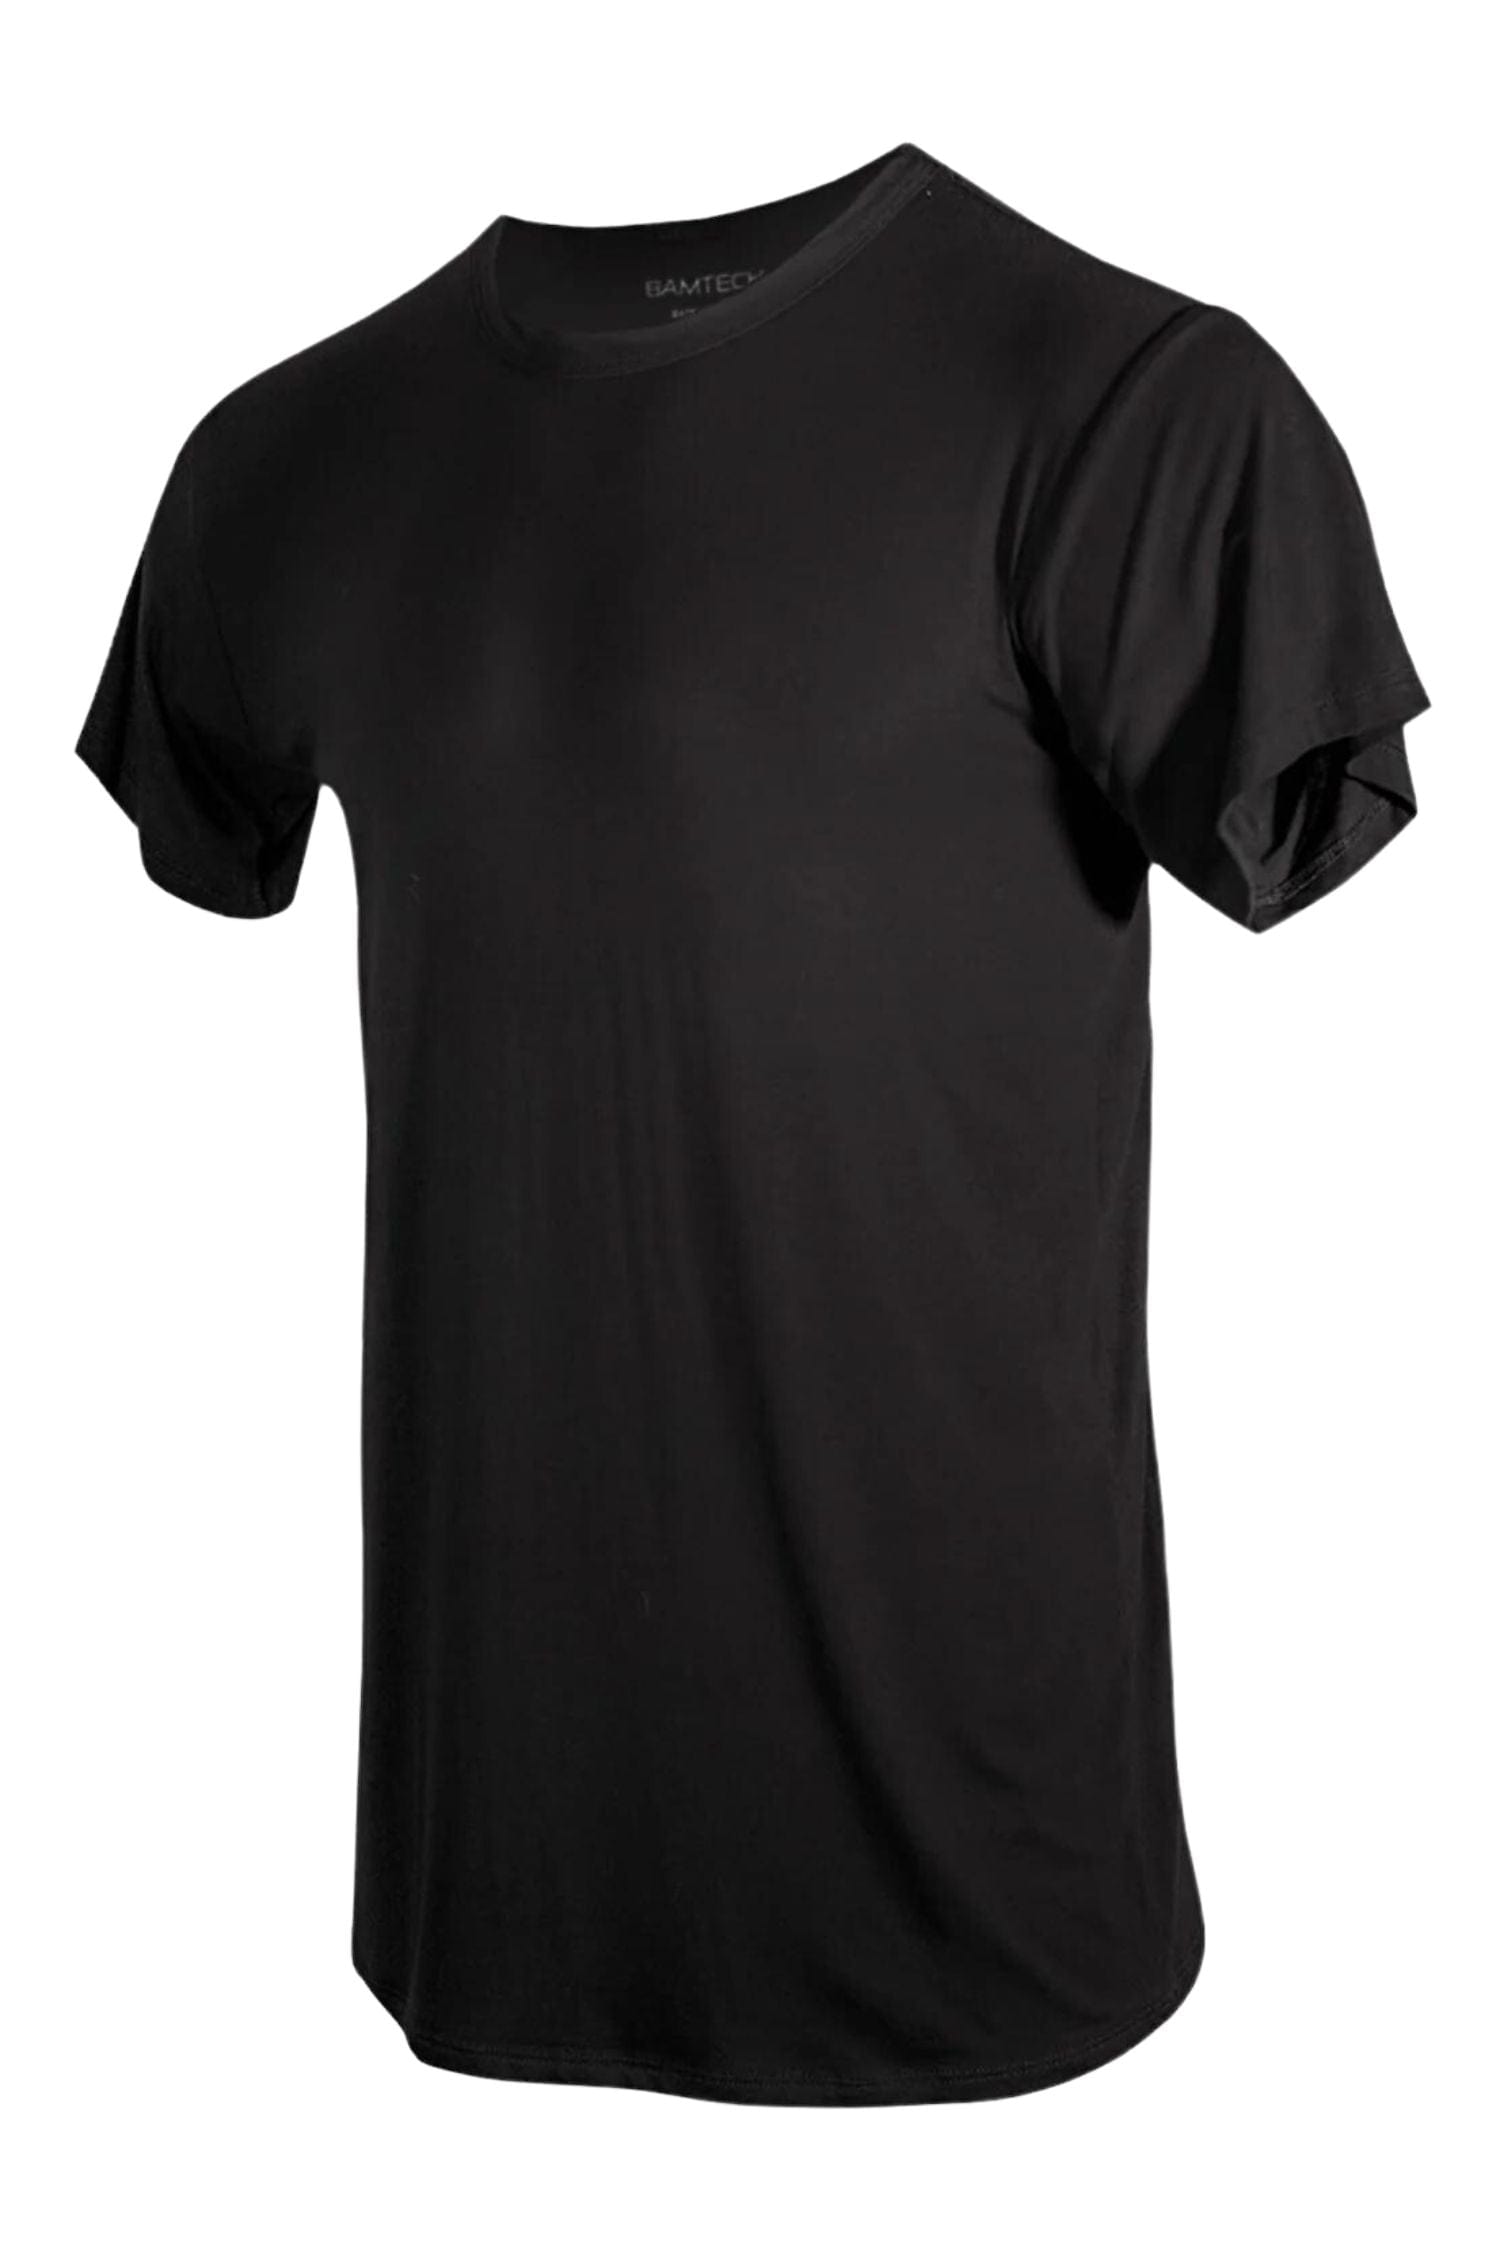 BAMTECH USA Aerotech Bamboo T-Shirt Black / L